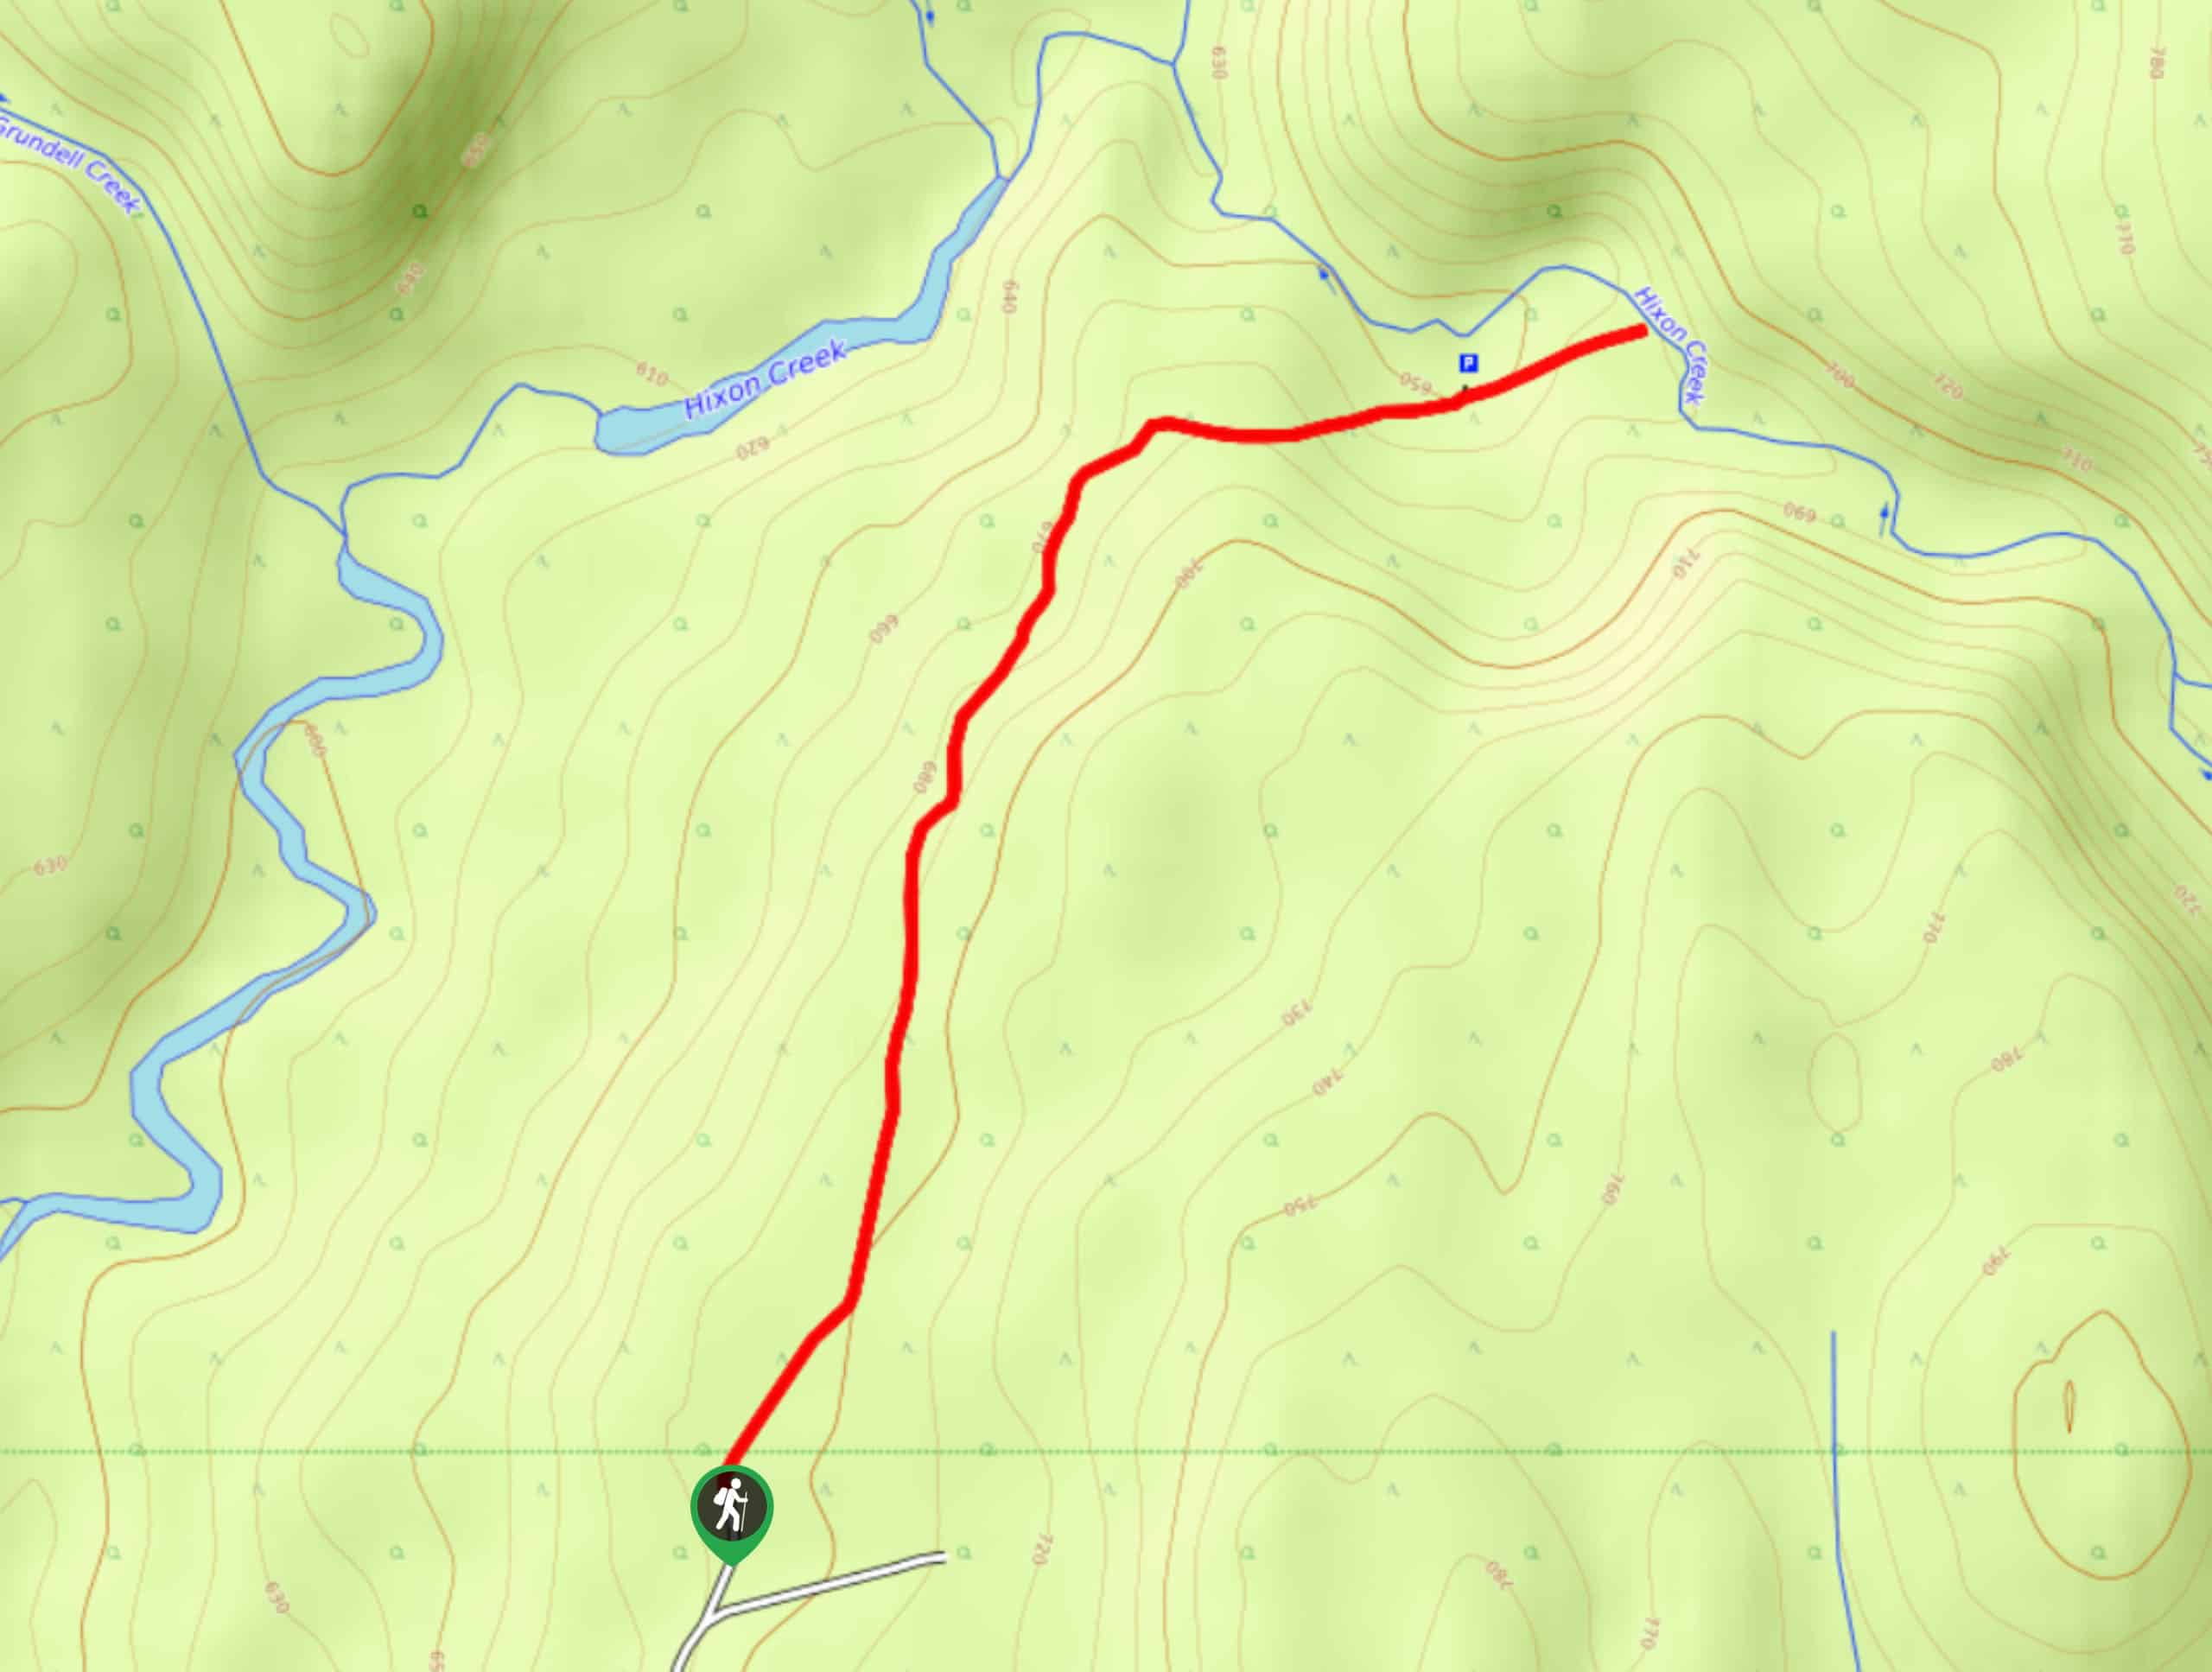 Hixon Falls Trail Map